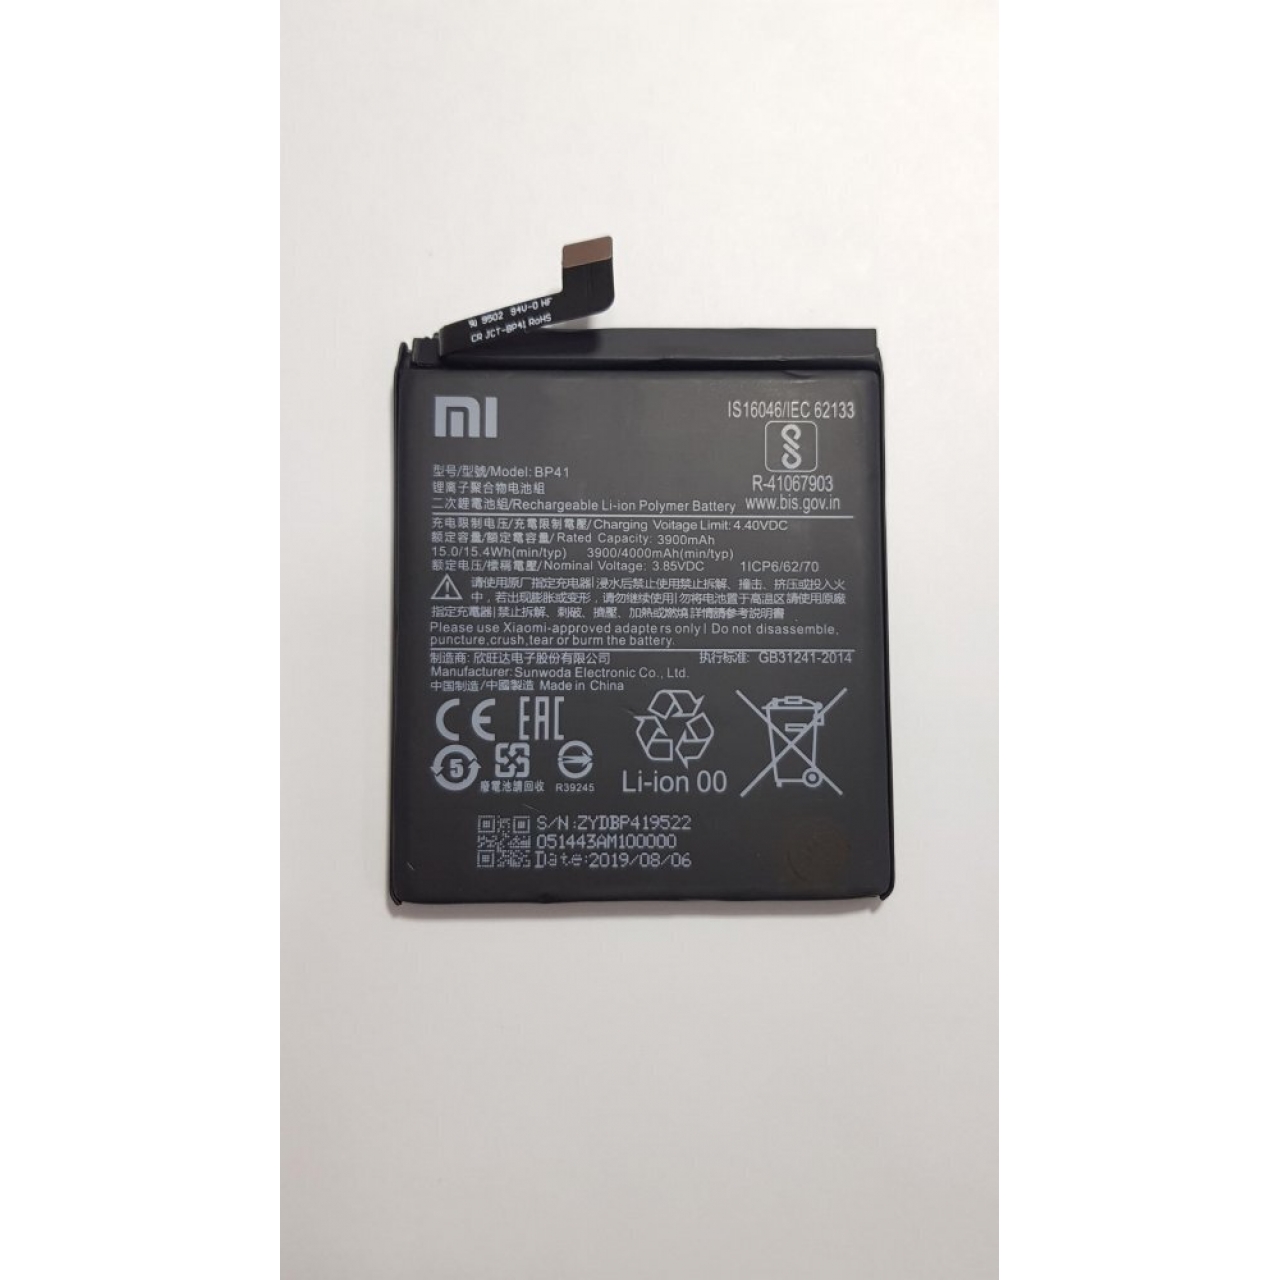 Xiaomi Mi 9T M1903F10G BP41 Pil Batarya Battery